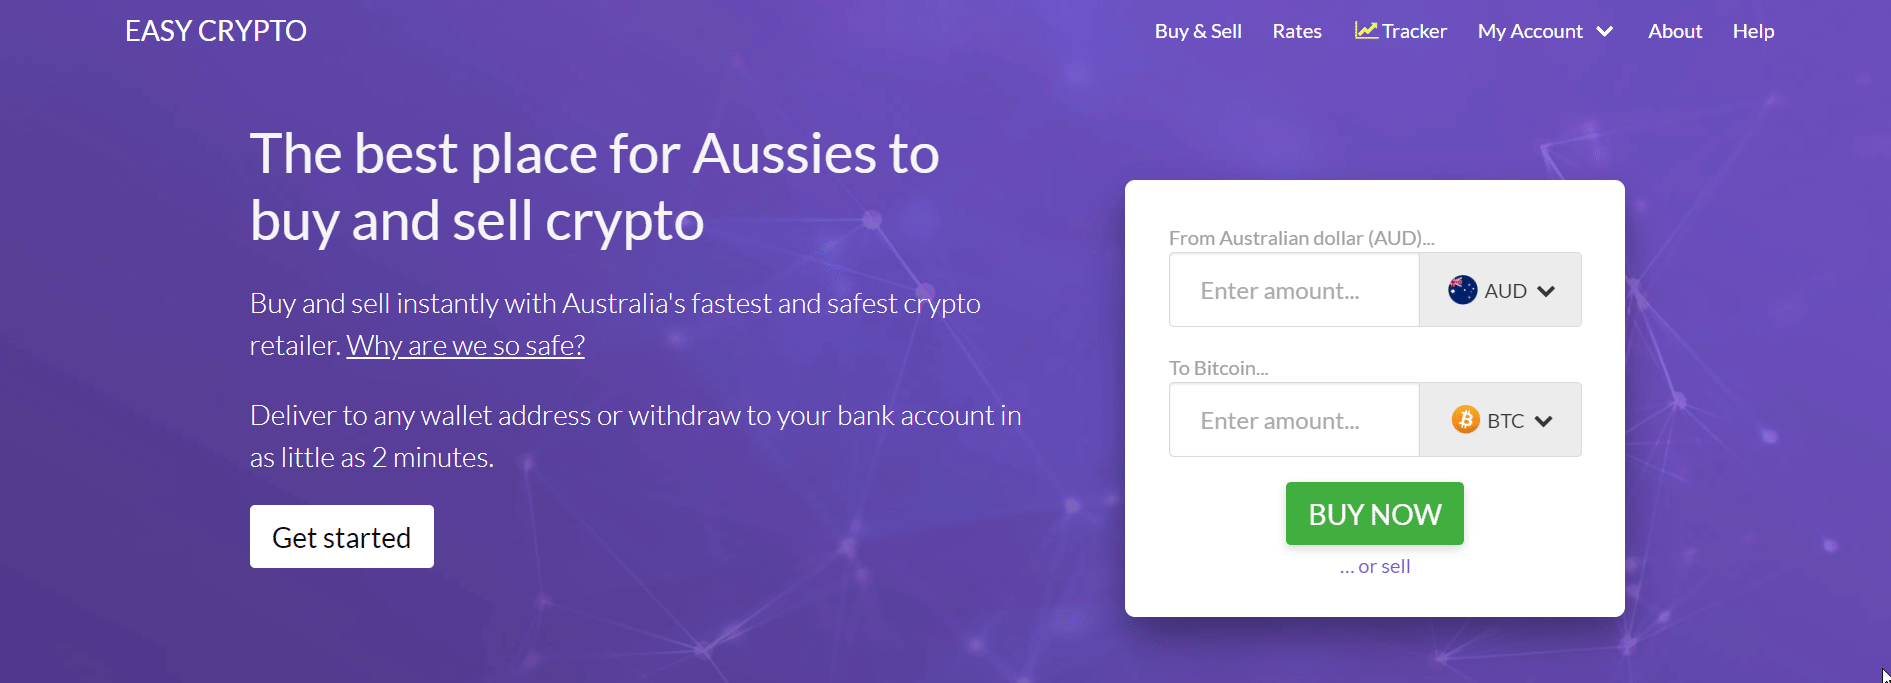 buy bitcoin Australia easy crypto AUS gif of home page exchange widget BTC